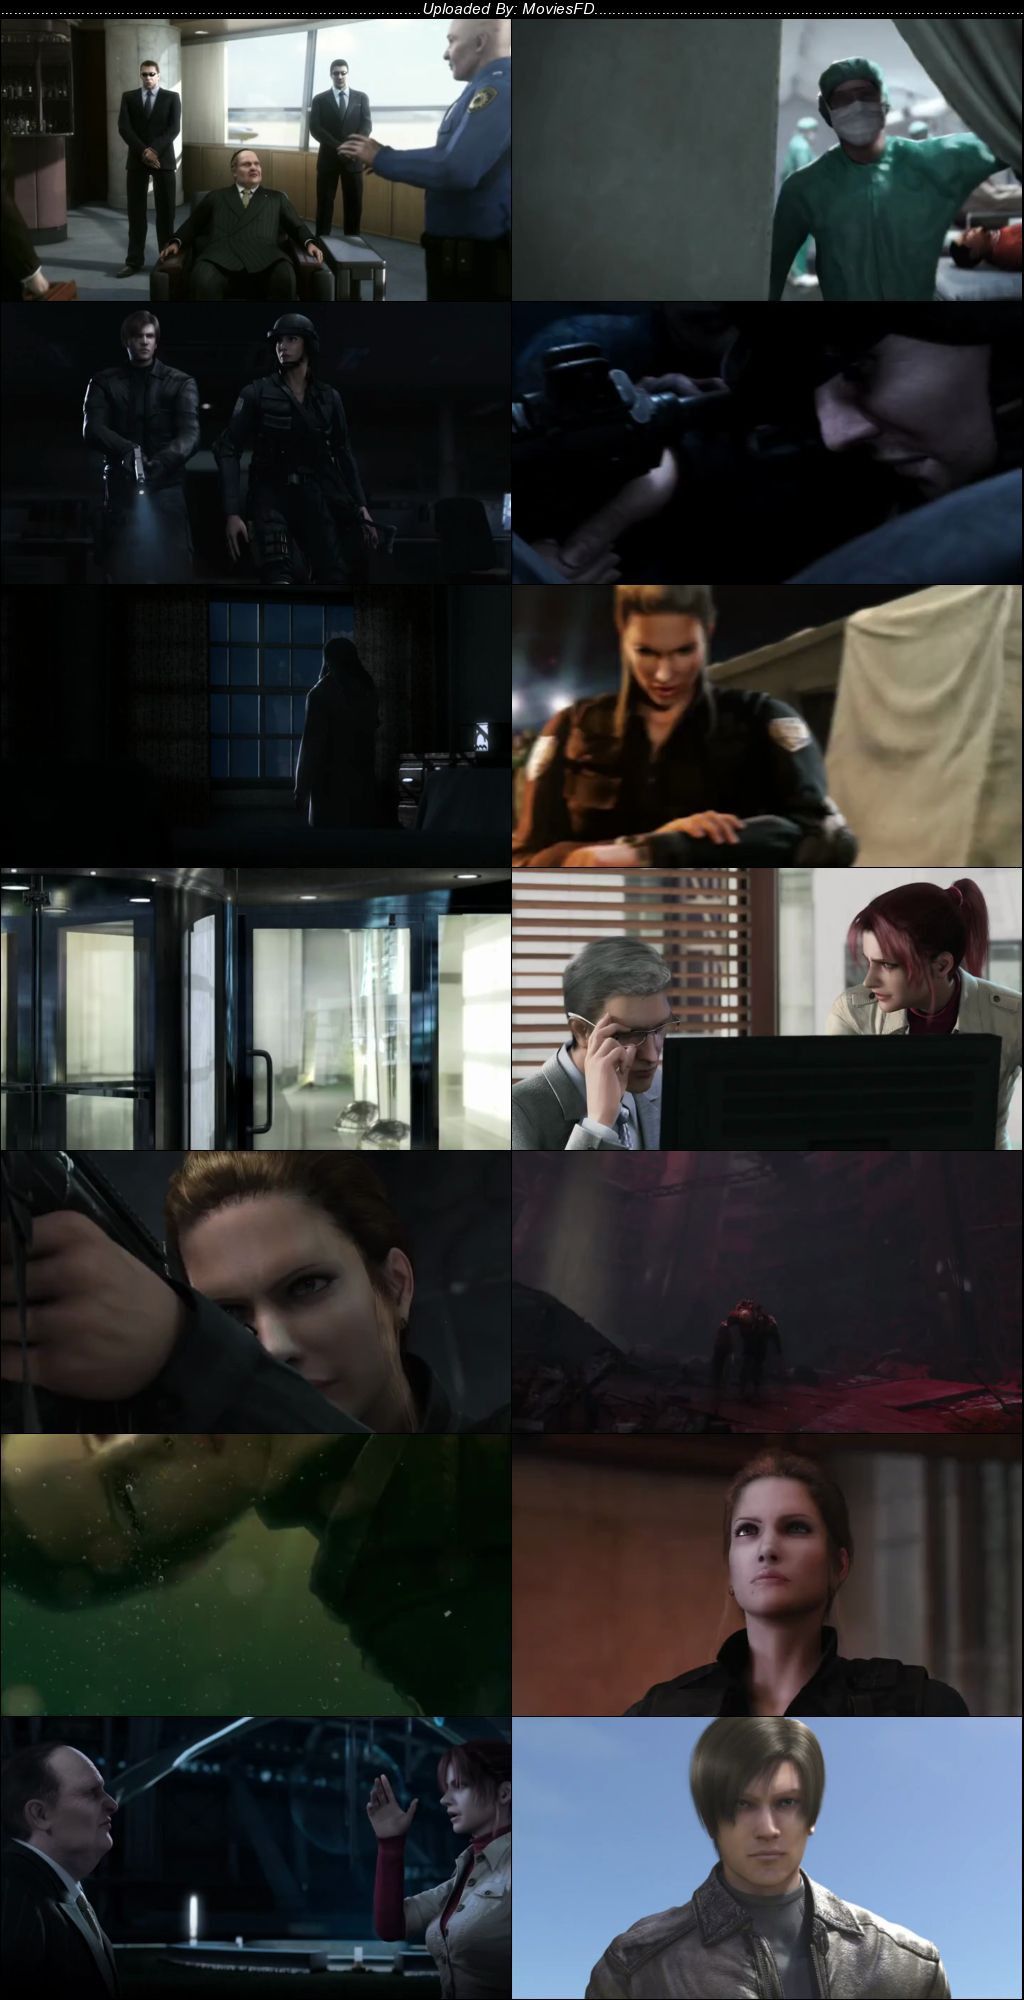 Download Resident Evil: Degeneration (2008) BluRay [Hindi + English] ESub 480p 720p